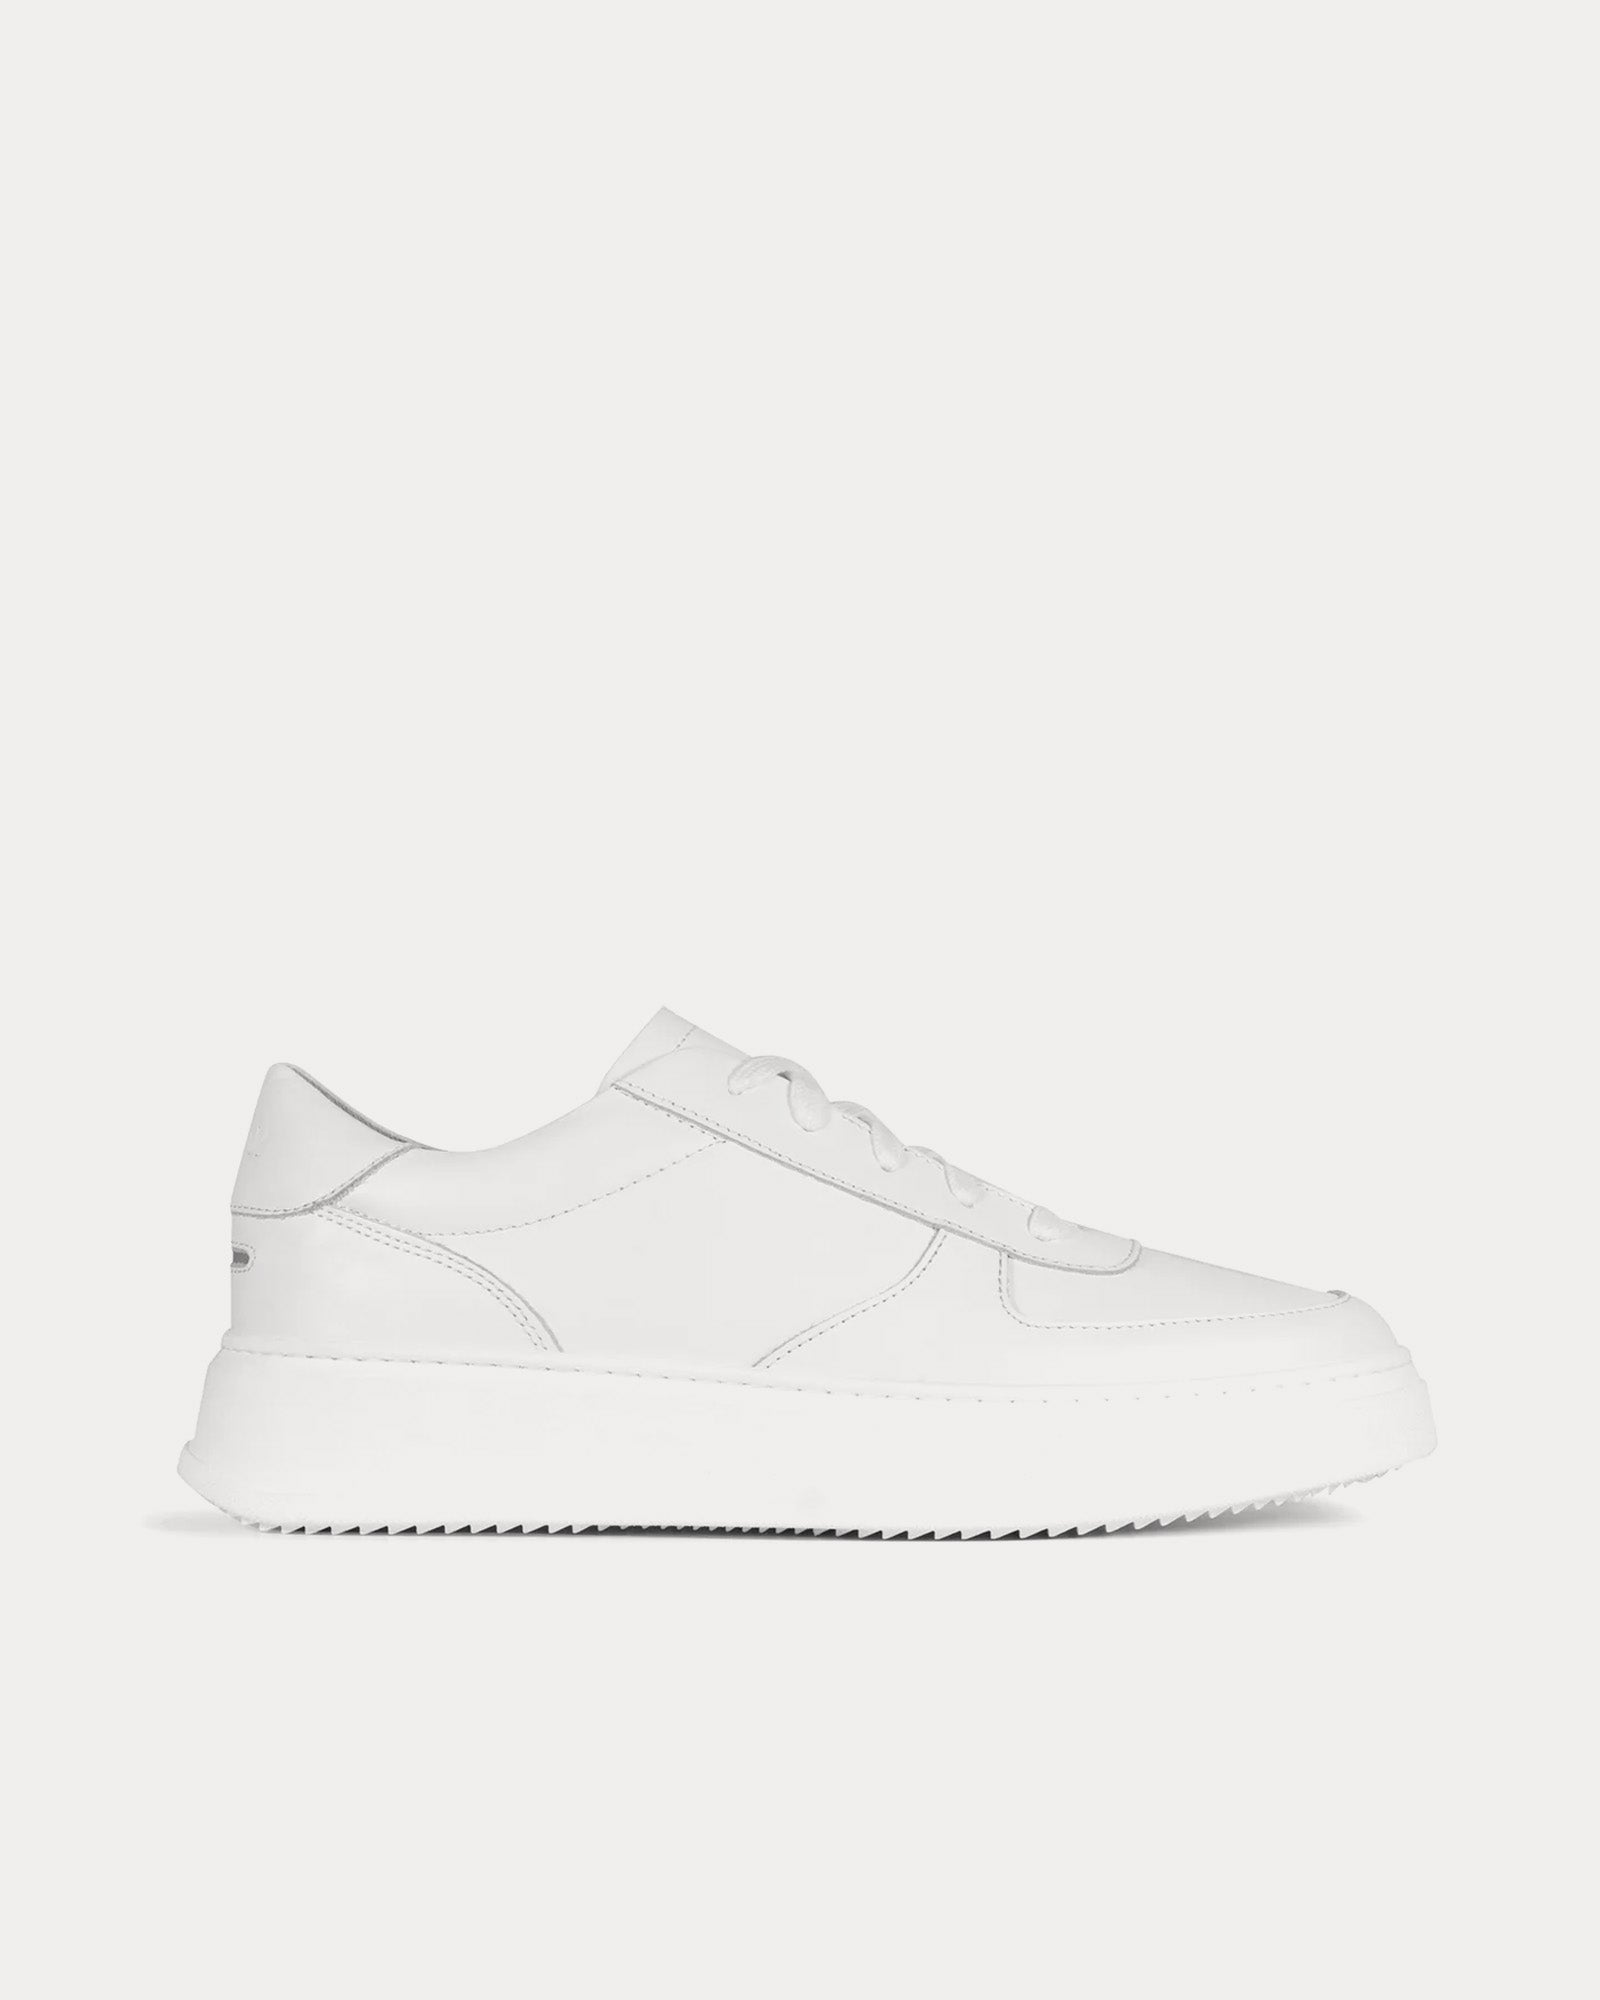 Unseen Footwear - Marais Leather White Low Top Sneakers